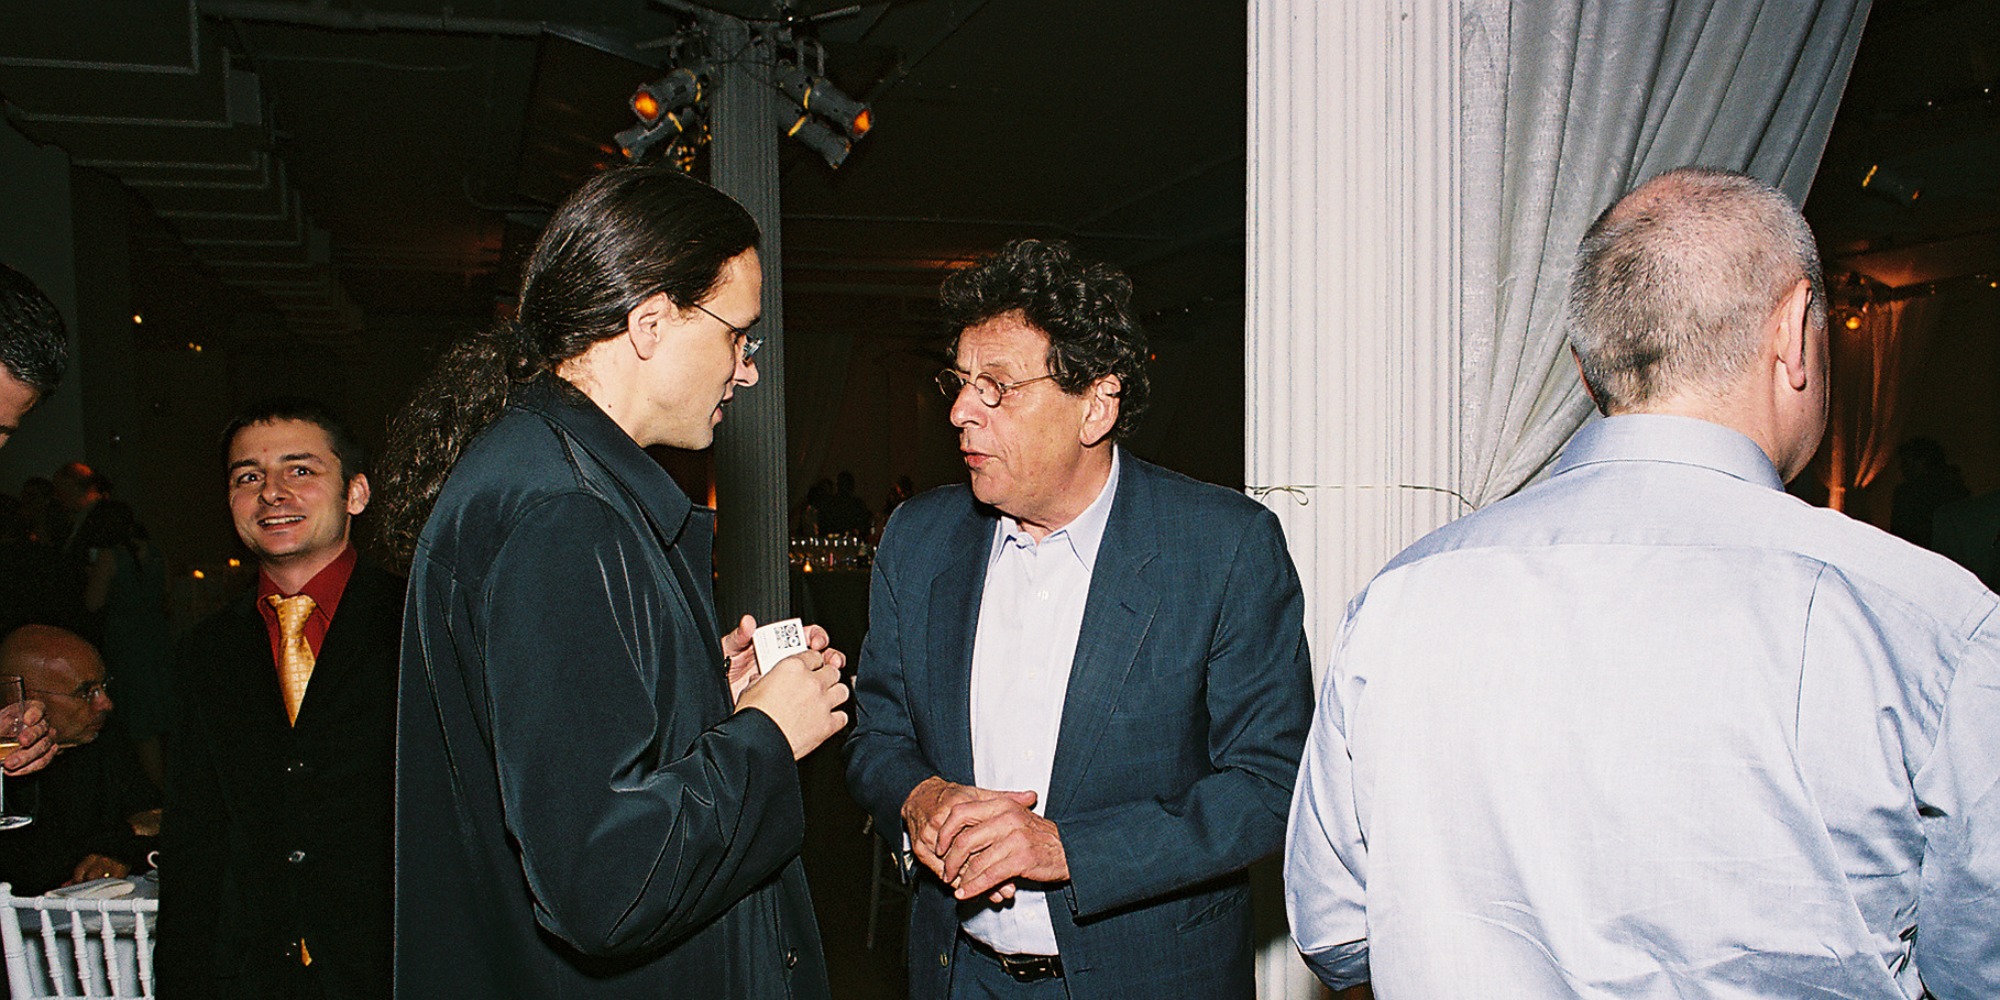 Philip Glass at the Prix gala